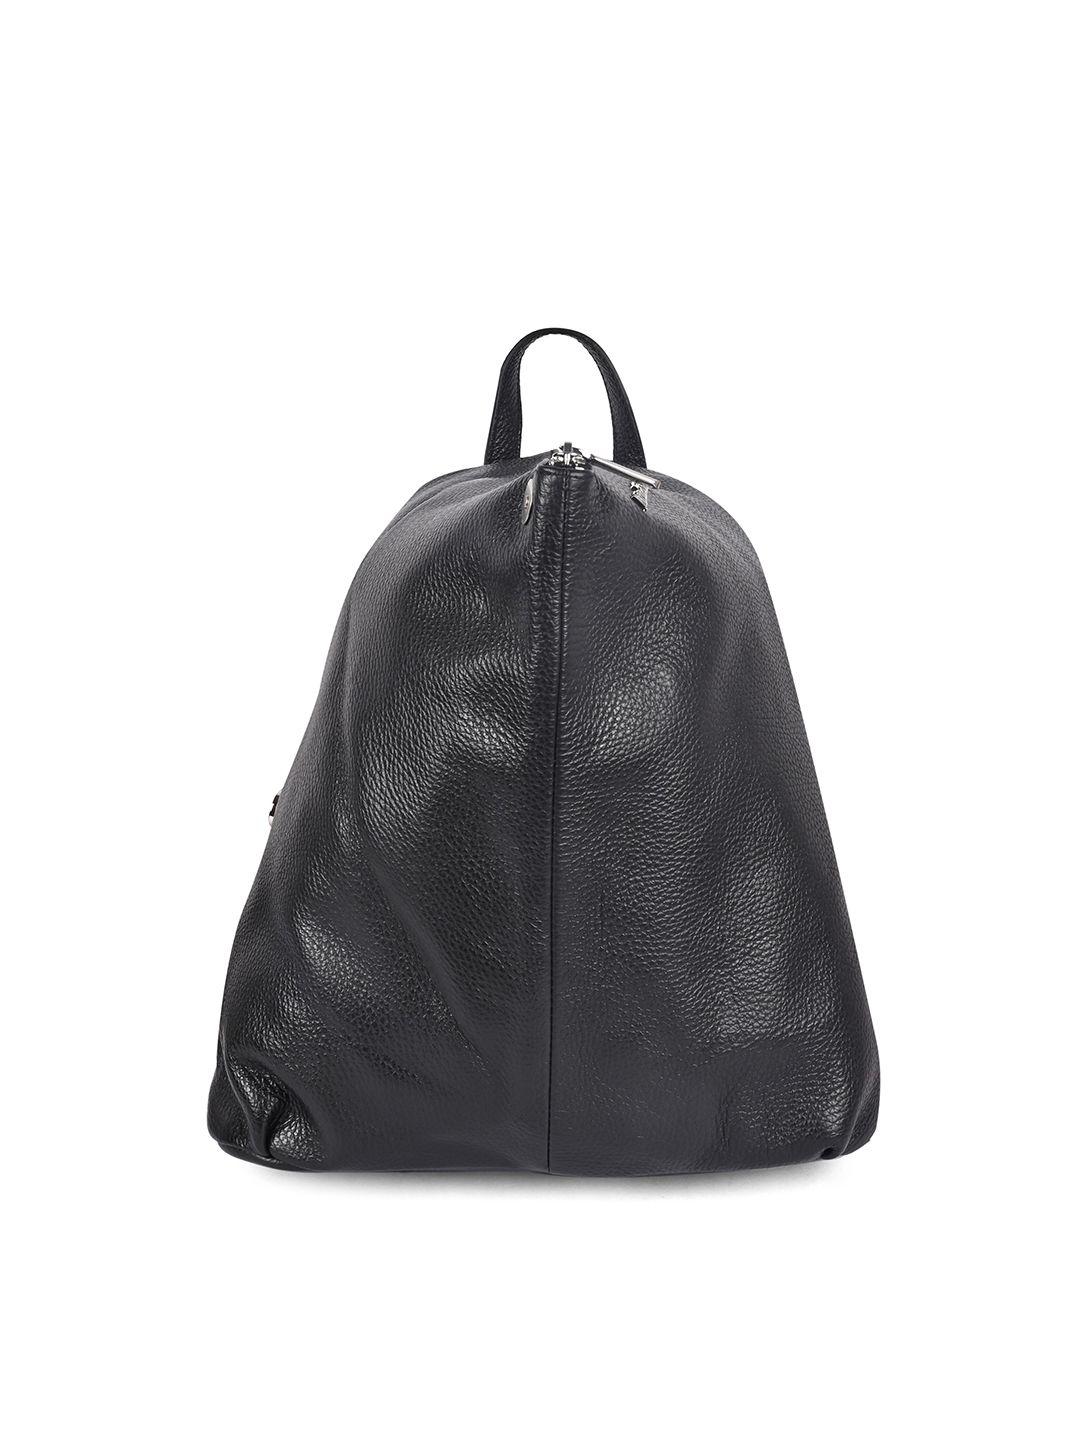 marina galanti women black leather backpack